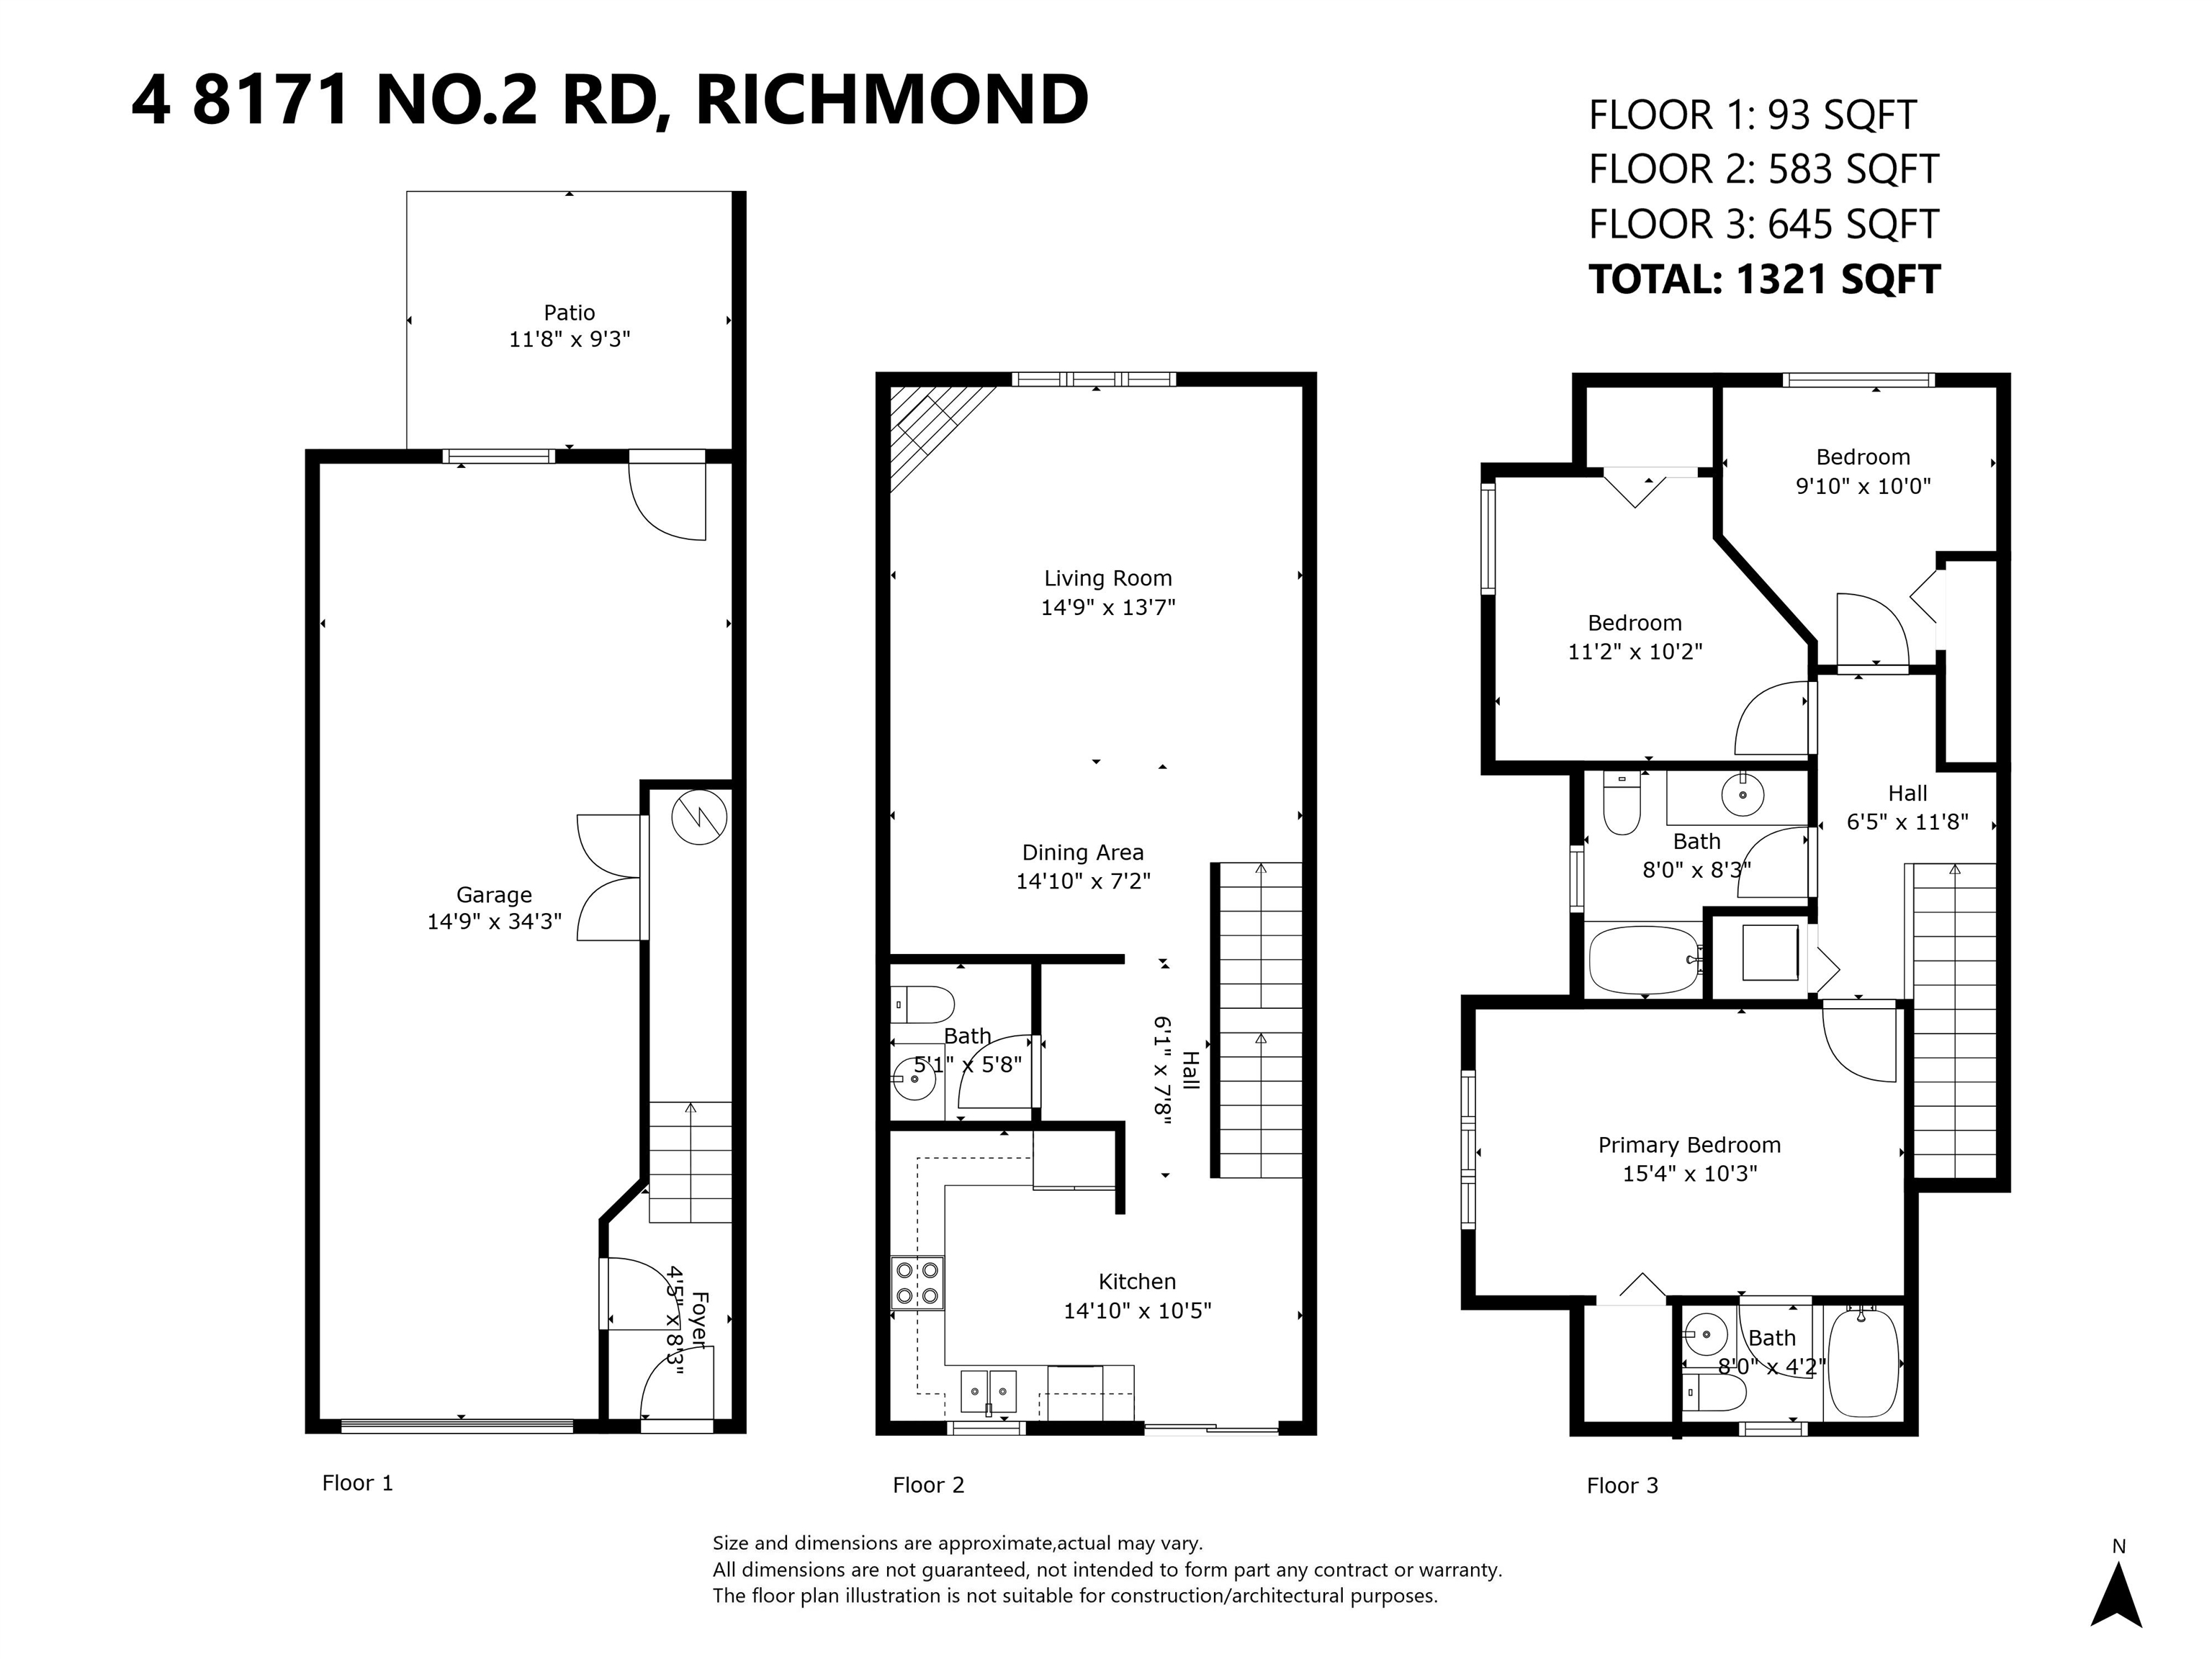 4 8171 NO. 2 ROAD, Richmond, BC, V7C 3M2 (262893356)